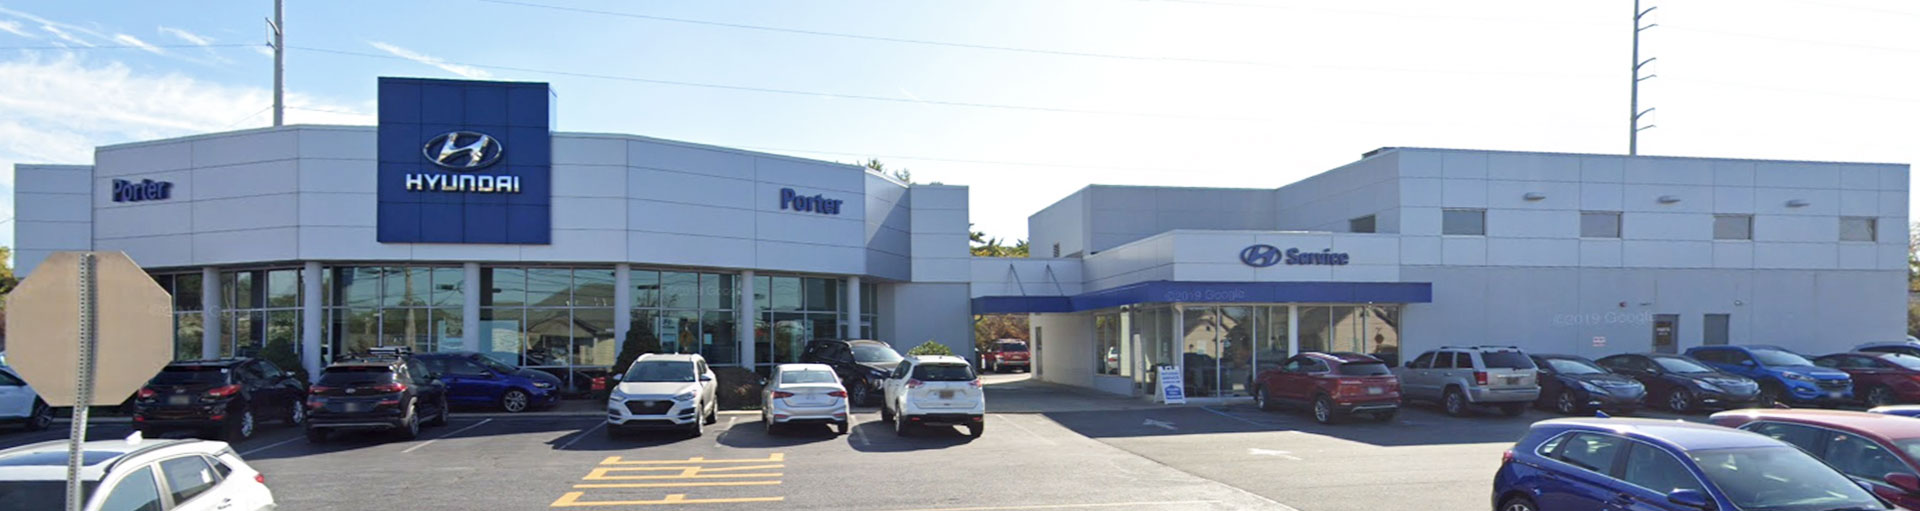 Porter Hyundai Tire Rotation Service